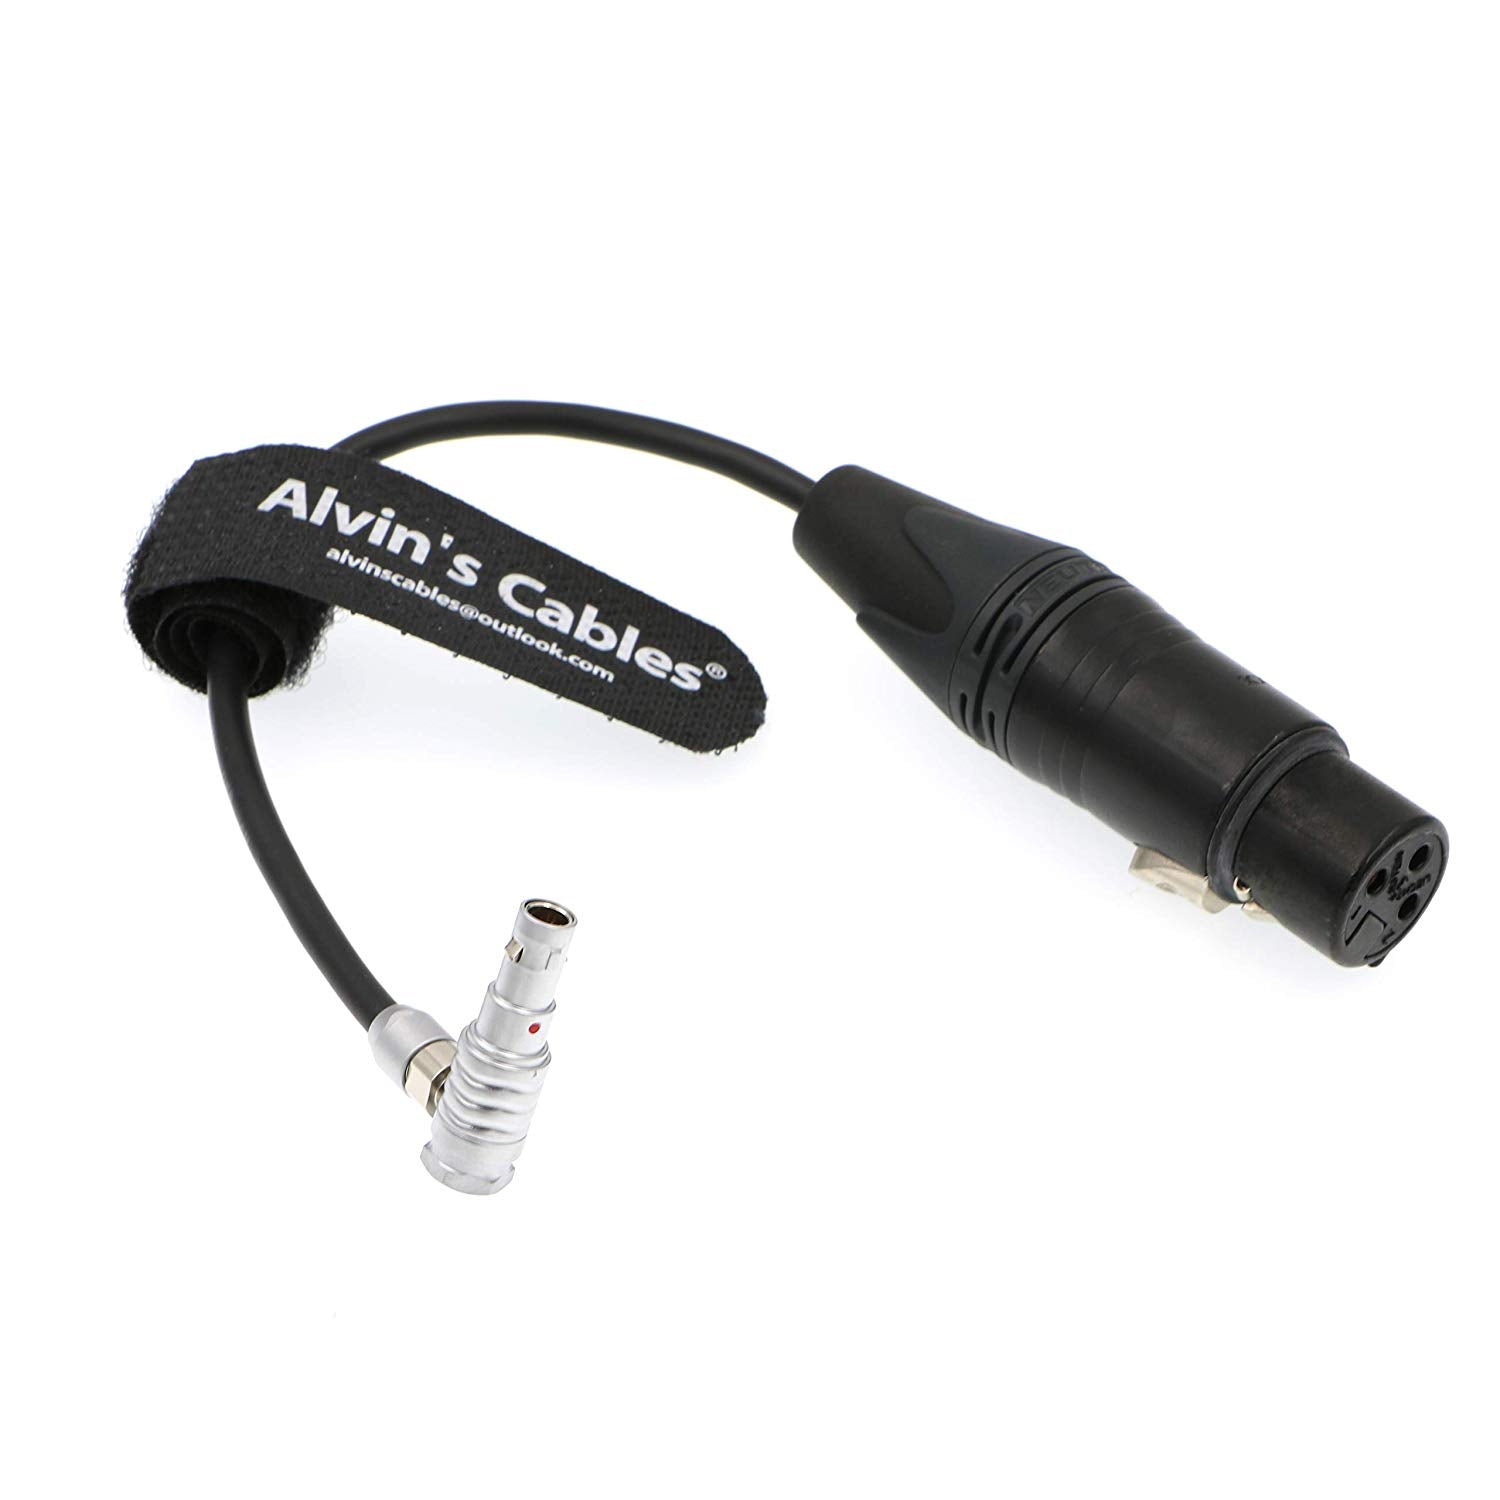 Alvin's Cables 5 Pin 00 Stecker rechtwinklig zu Original XLR 3 Pin Buchse Kabel für Z CAM E2 Kamera